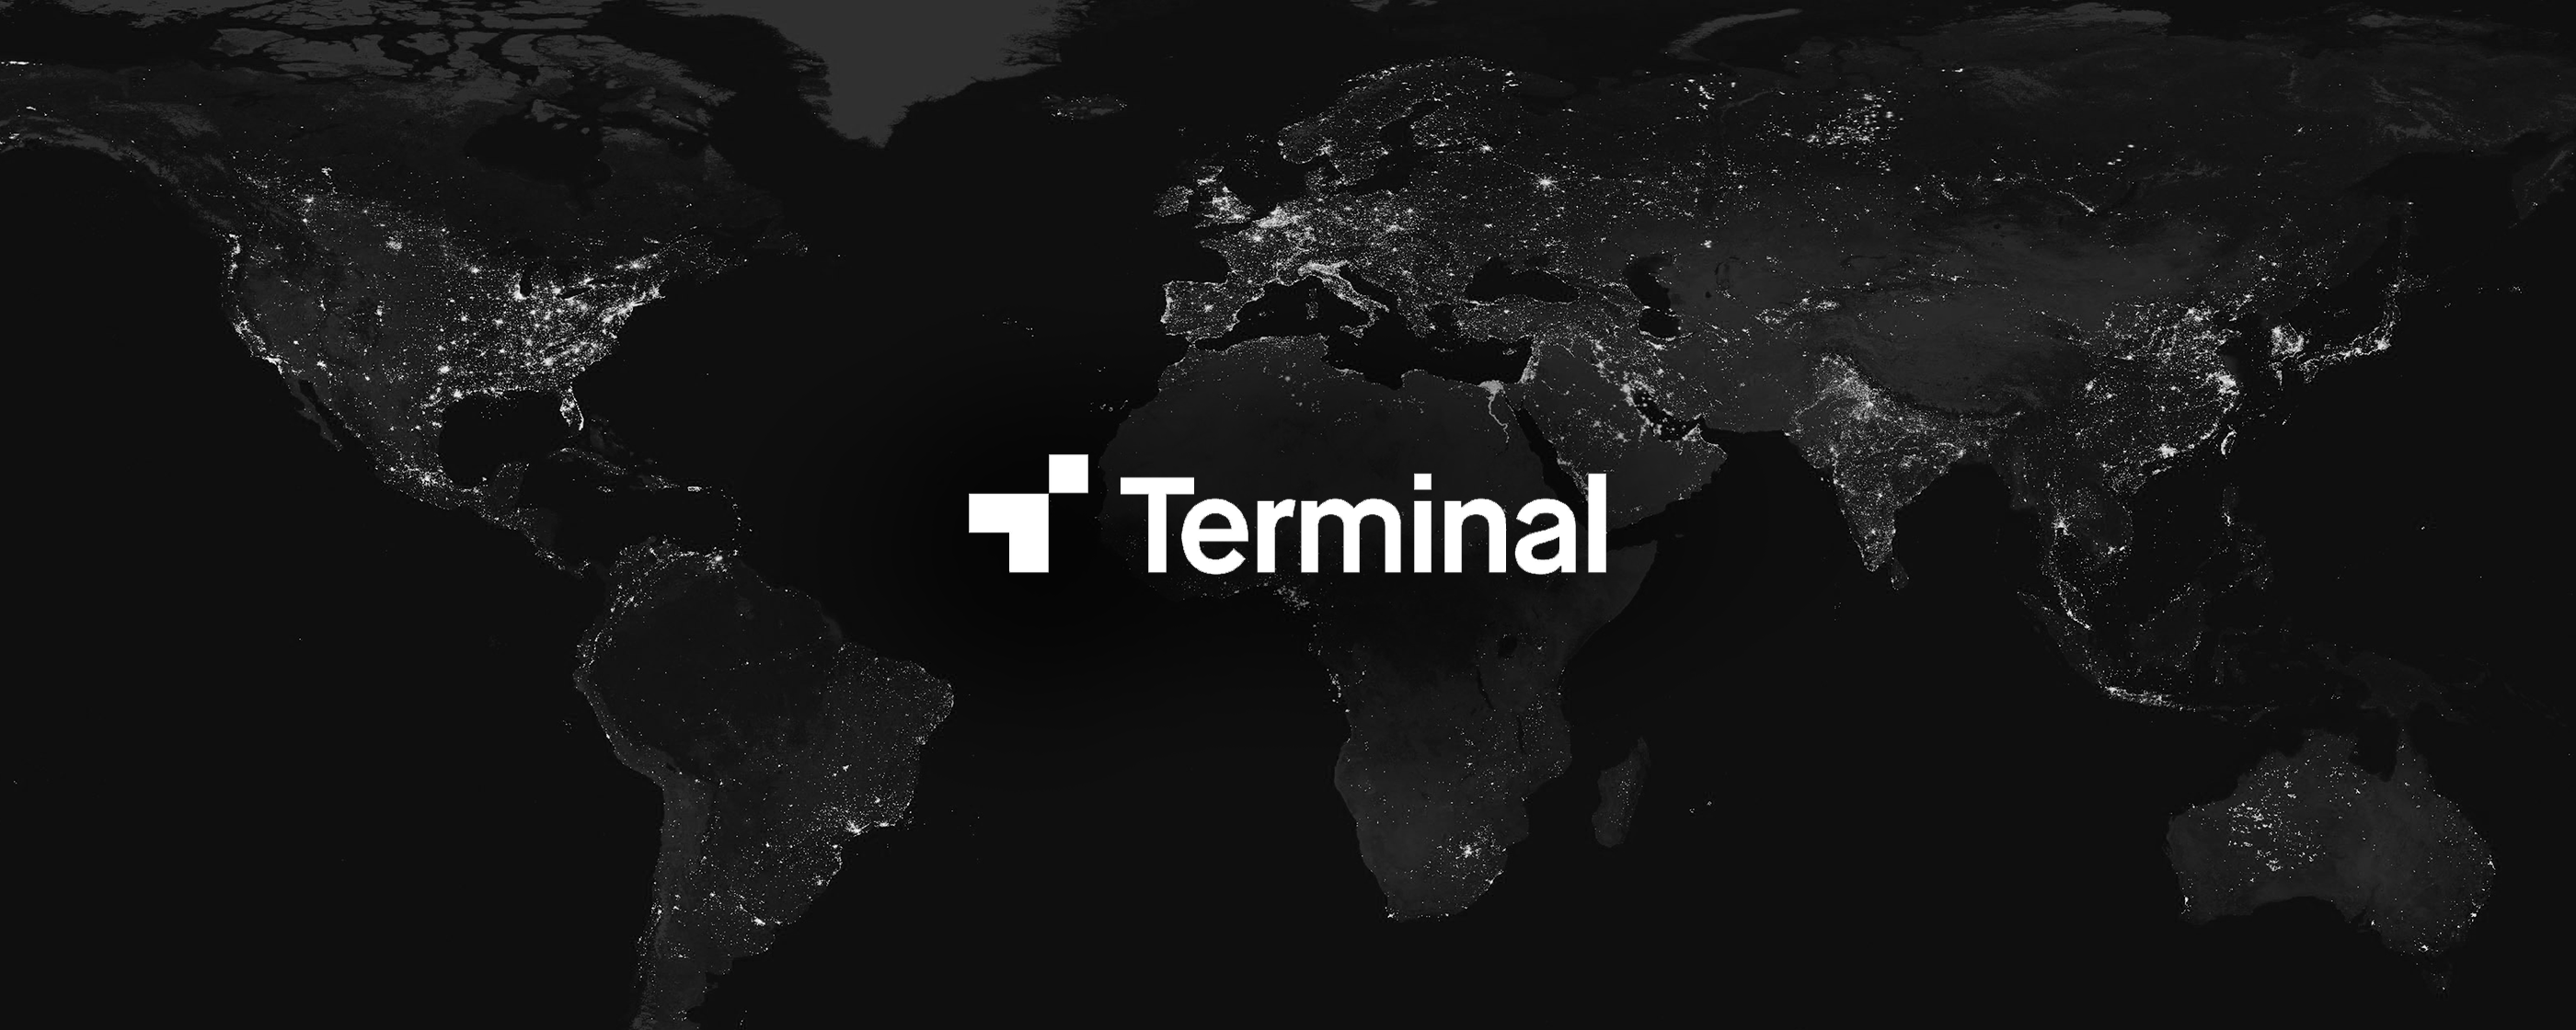 Announcing Terminal